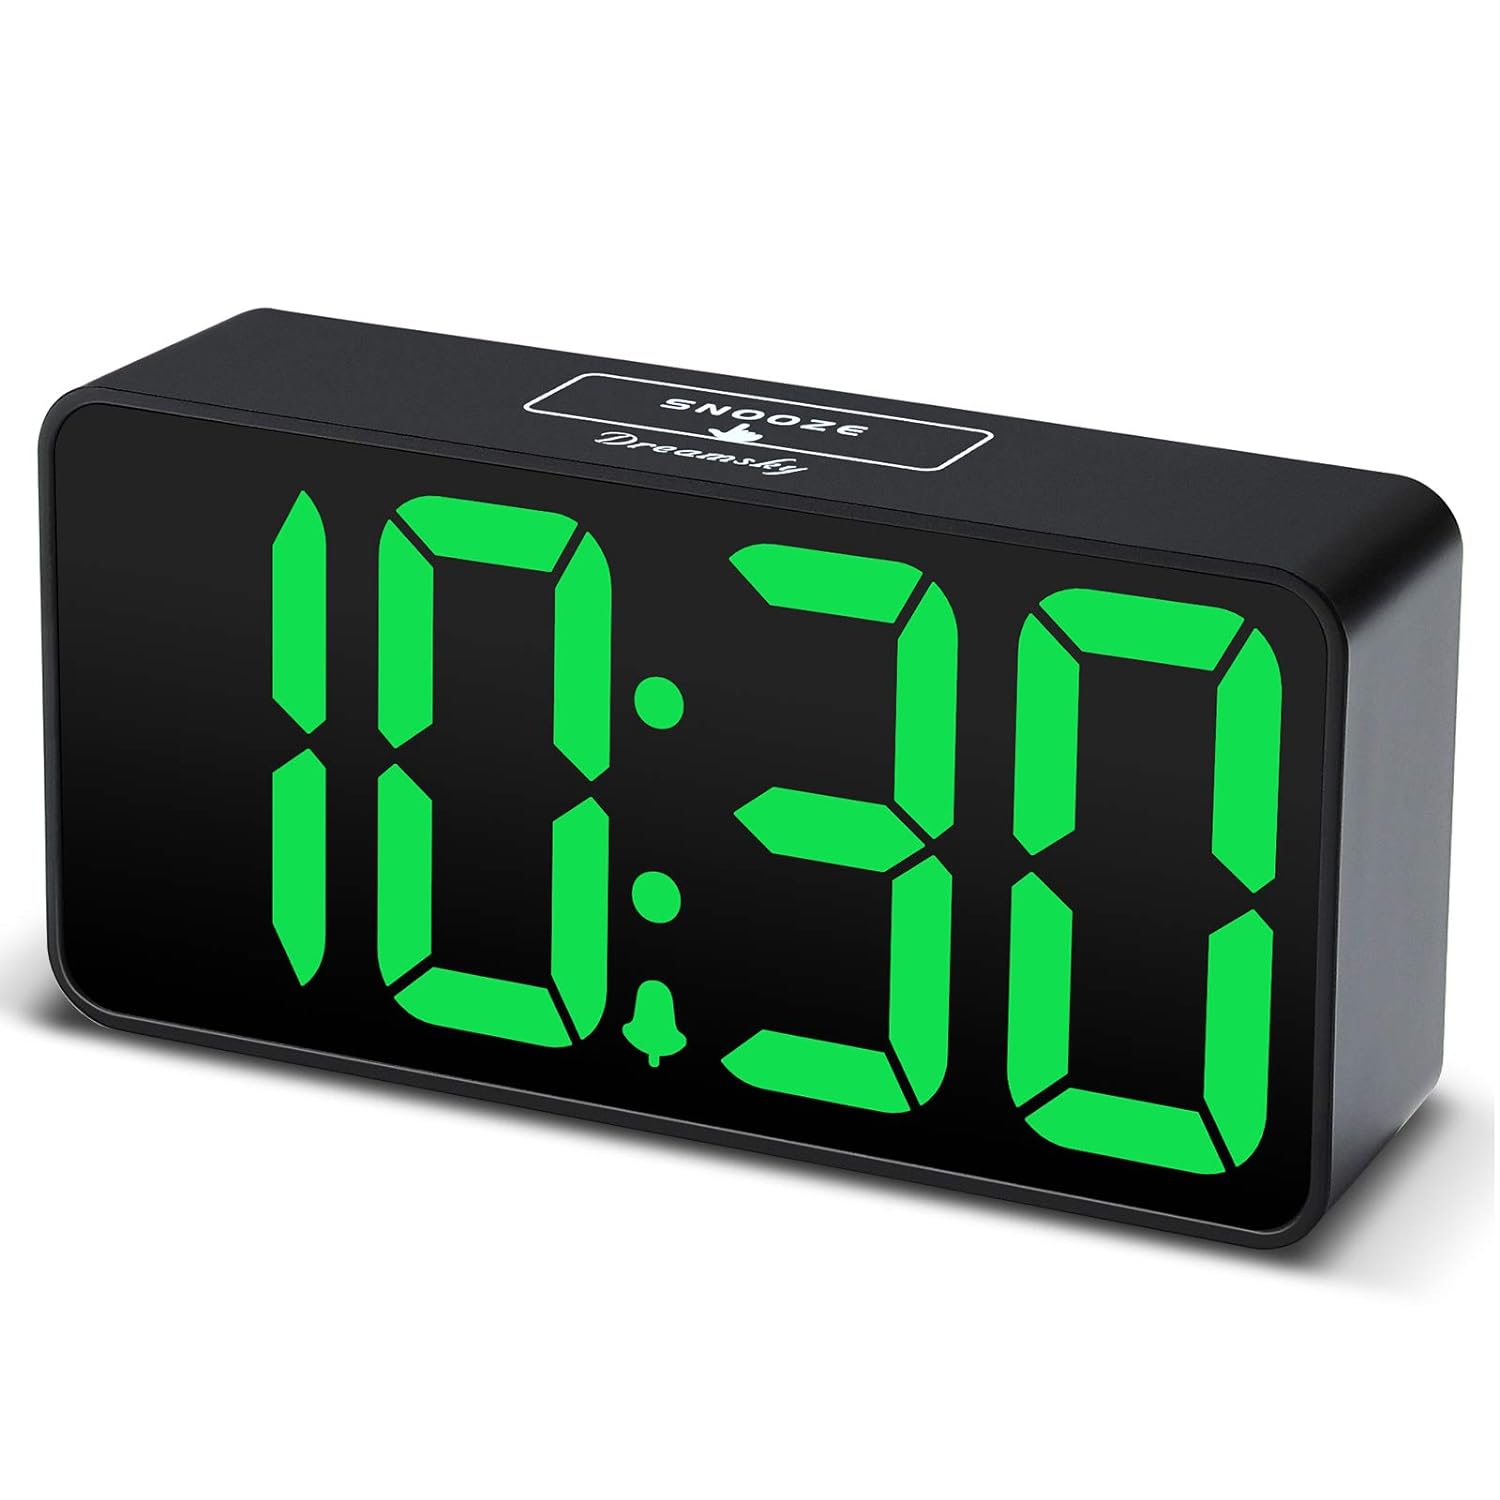 Alarm Clock with USB Port